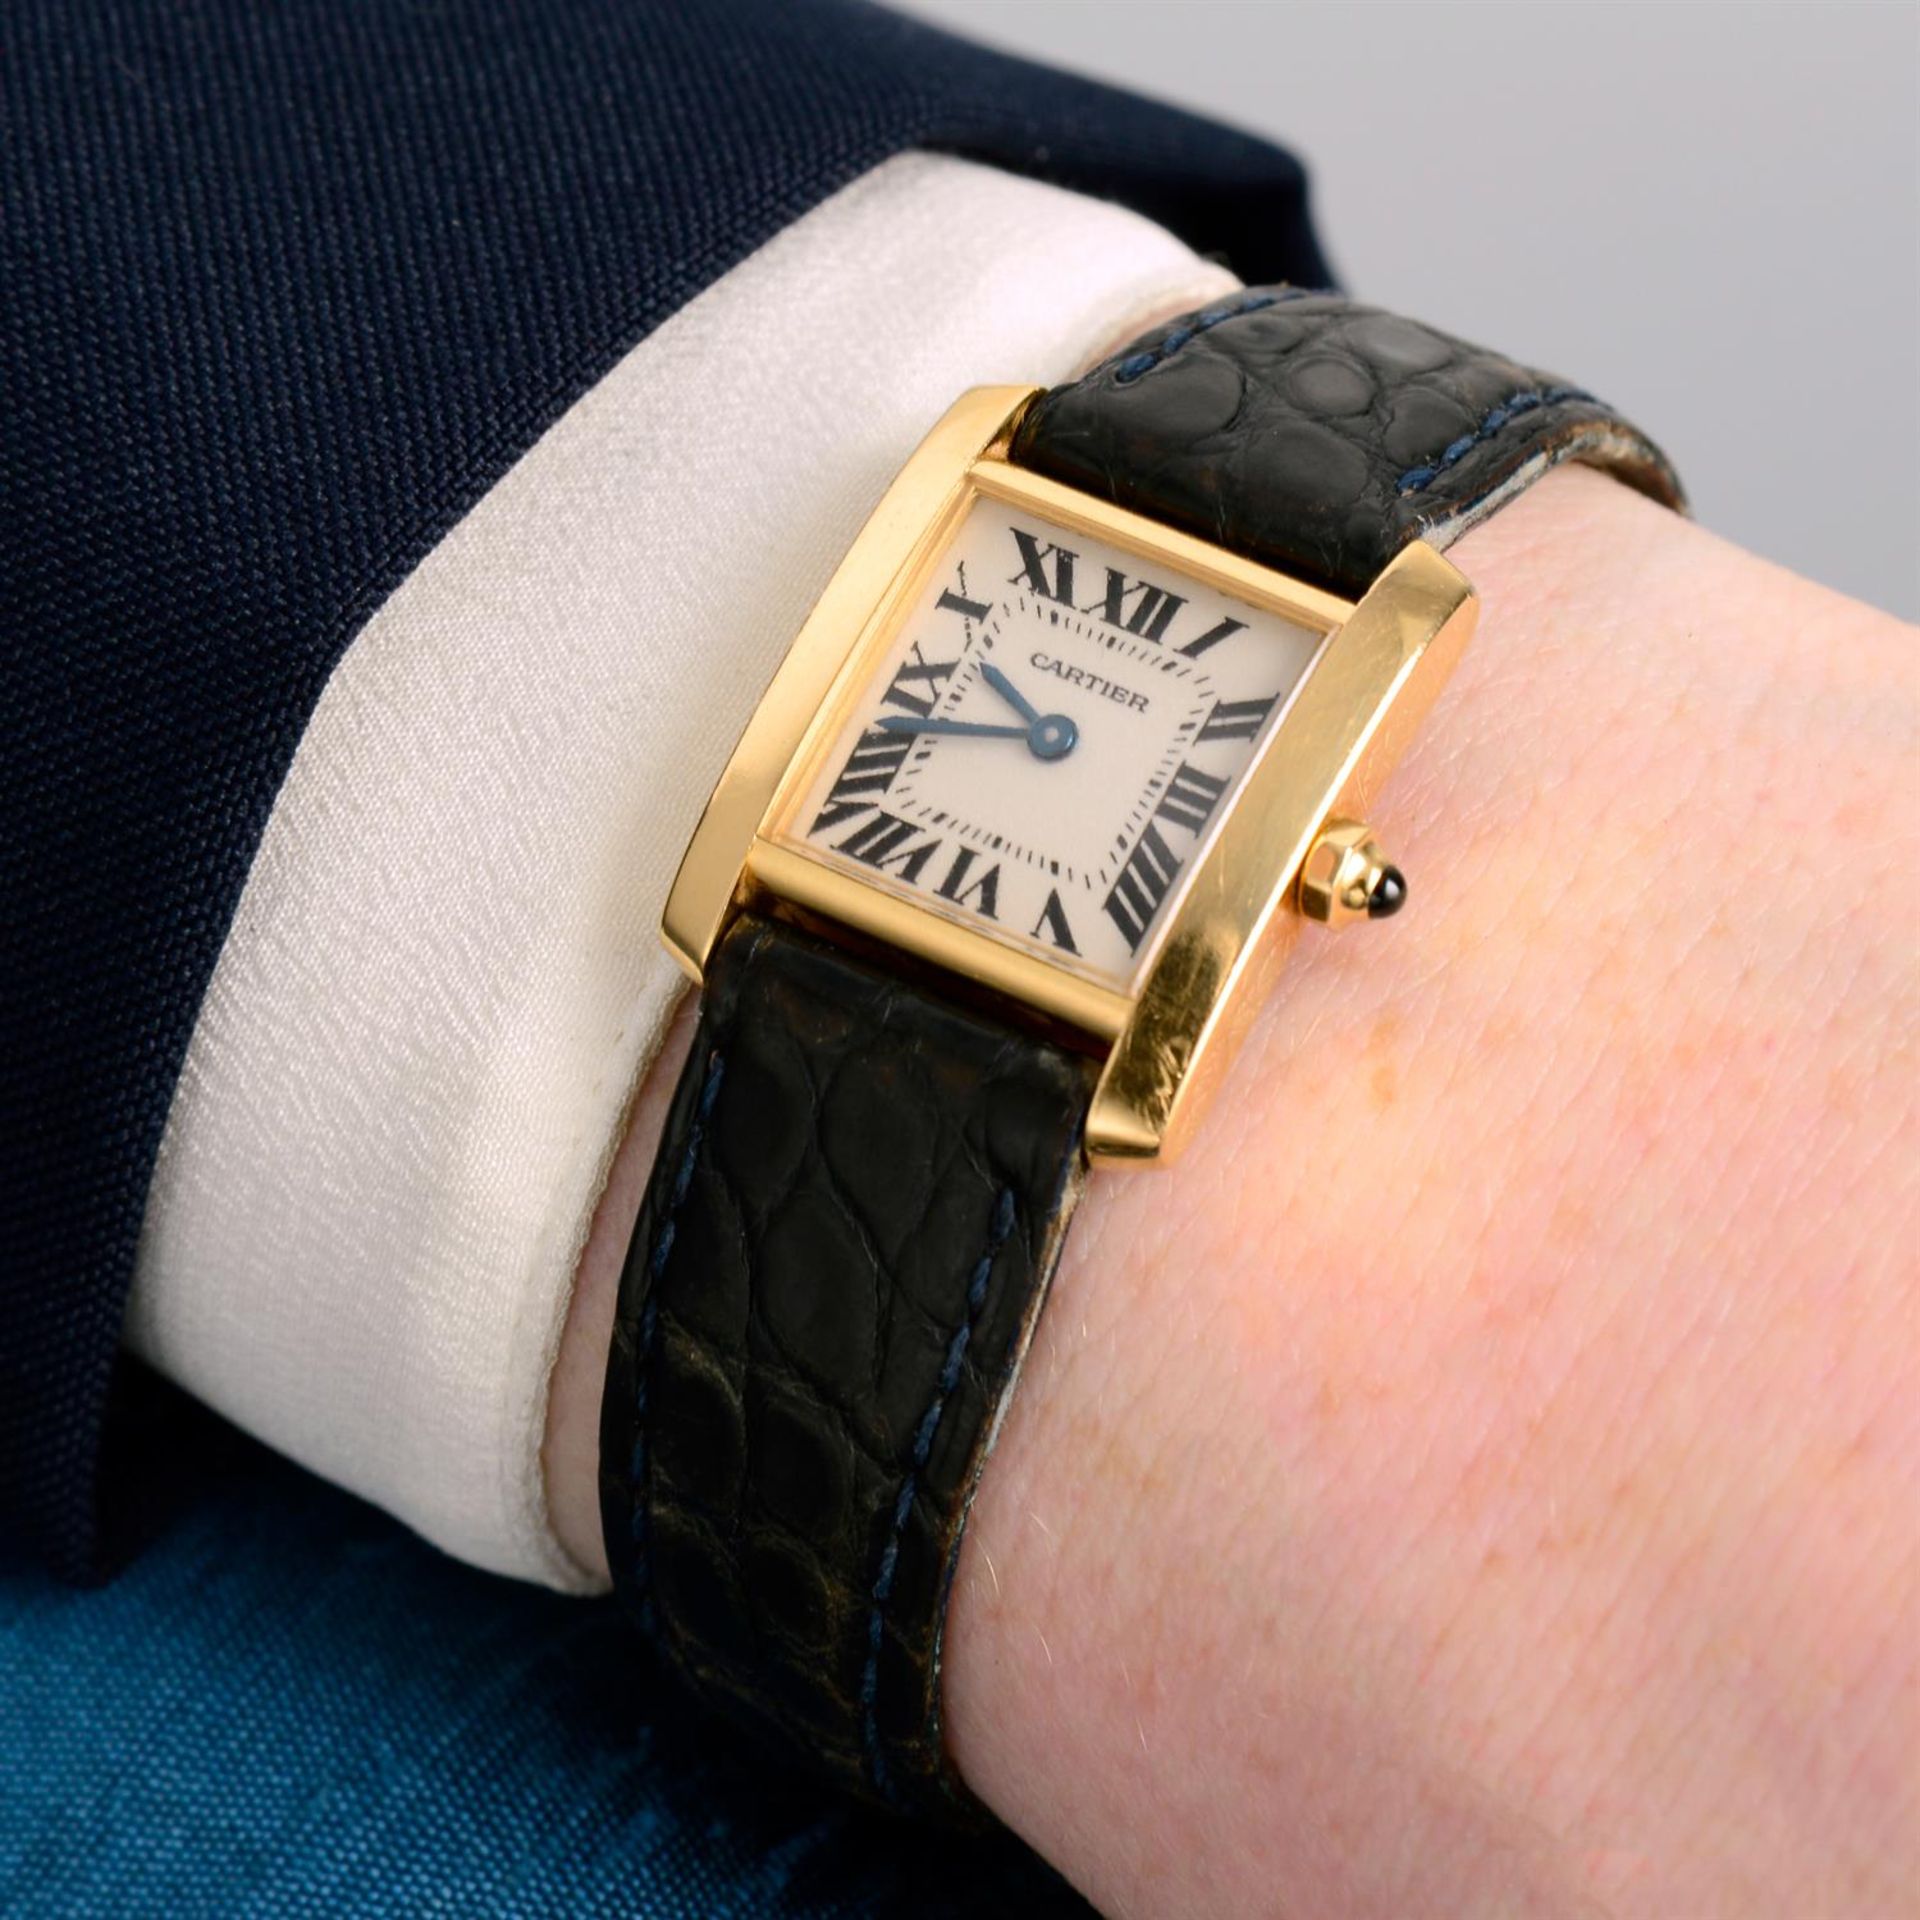 CARTIER - a yellow metal Tank Française wrist watch, 20mm. - Image 5 of 5